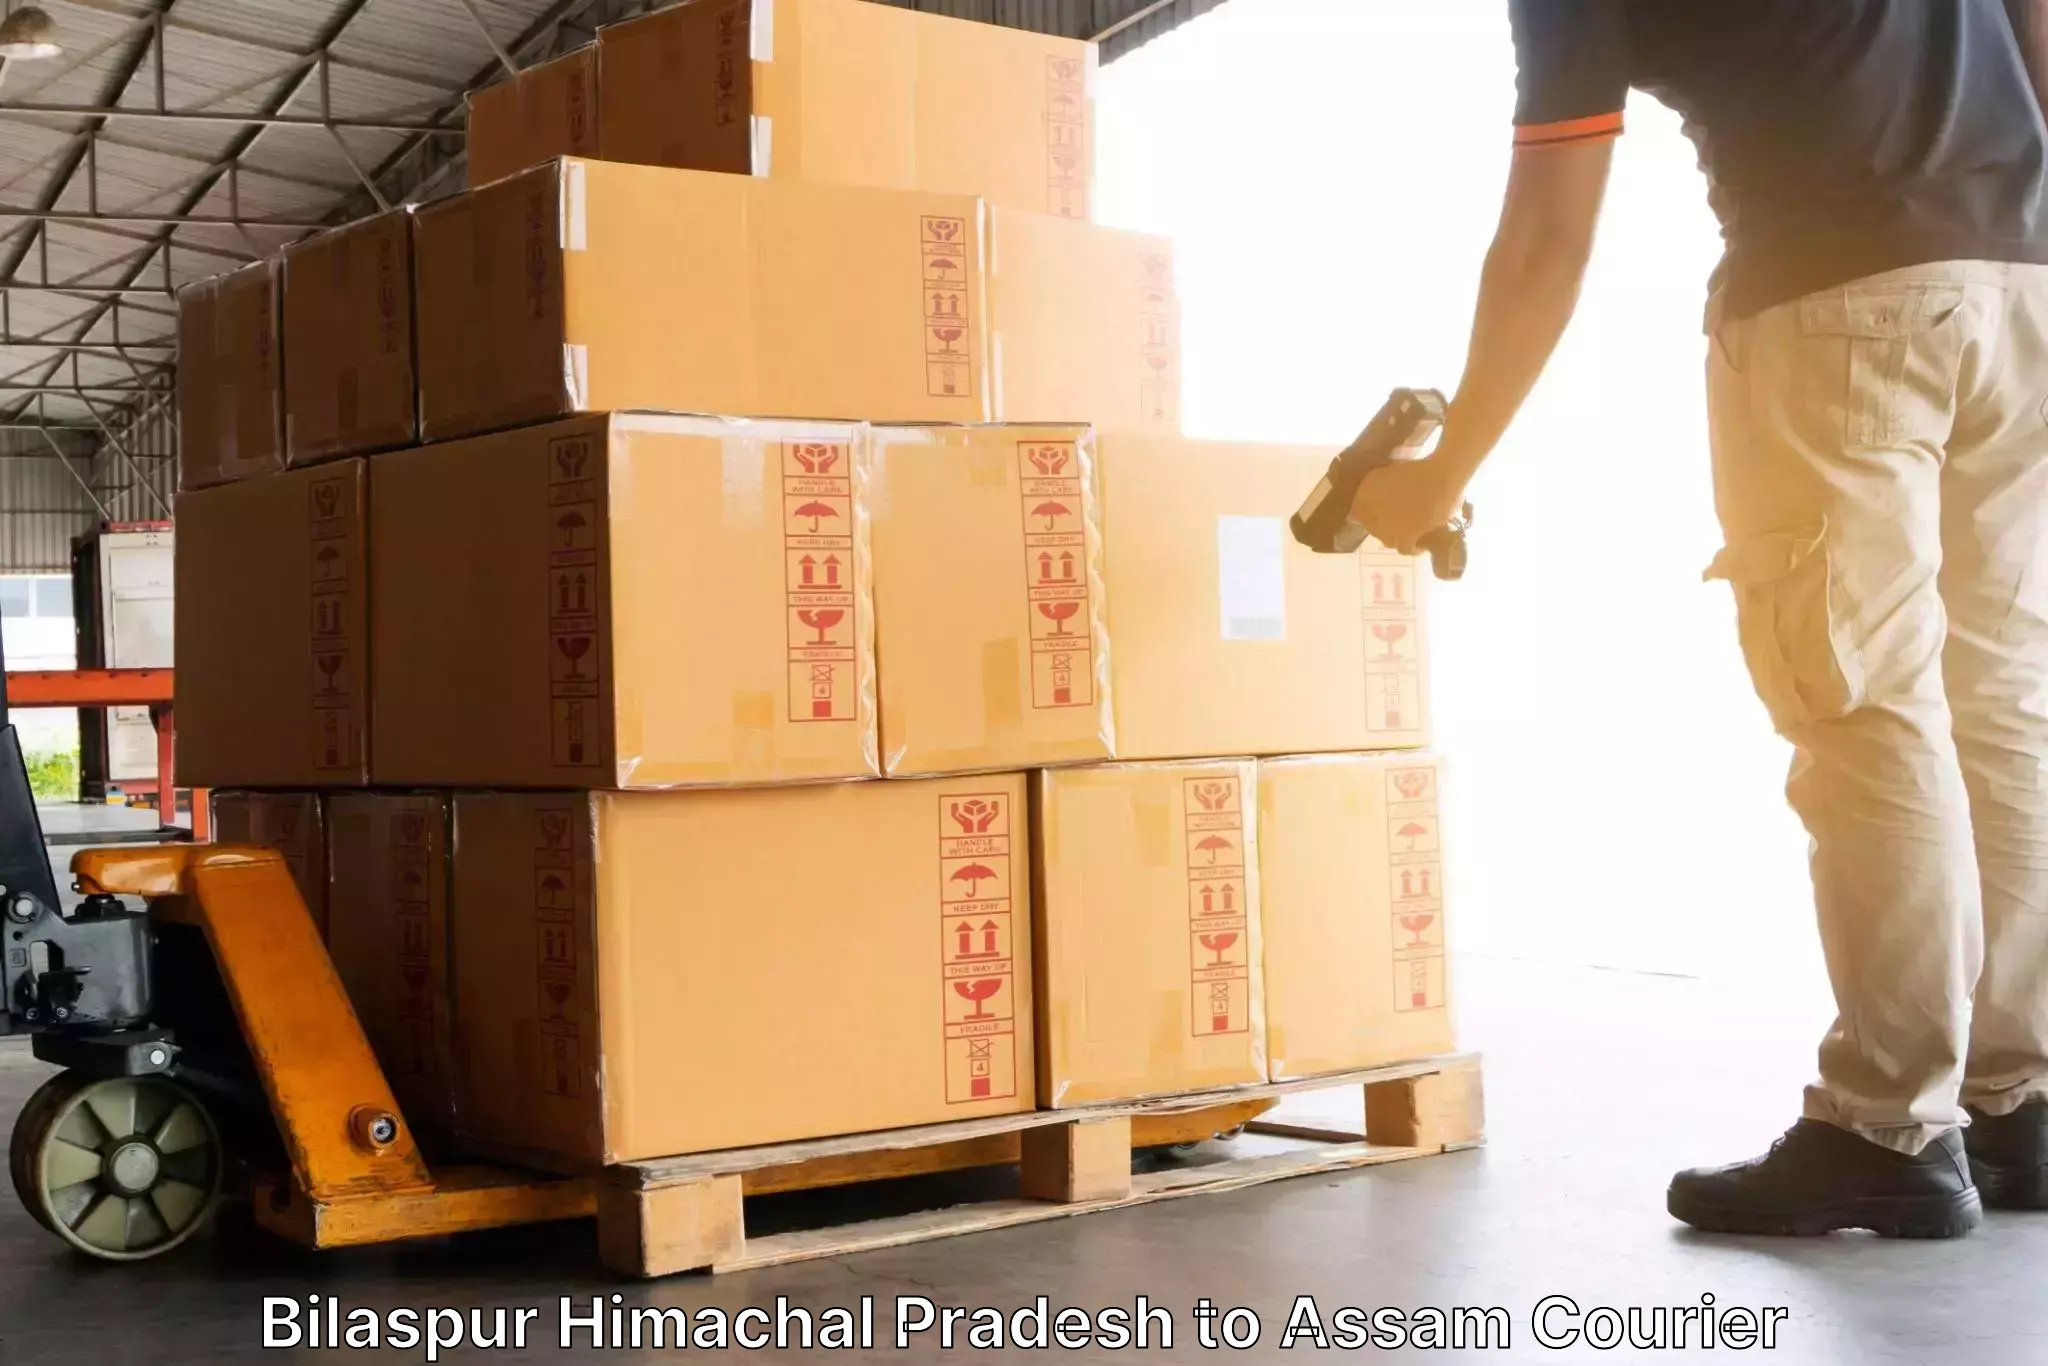 Package delivery network Bilaspur Himachal Pradesh to Mazbat